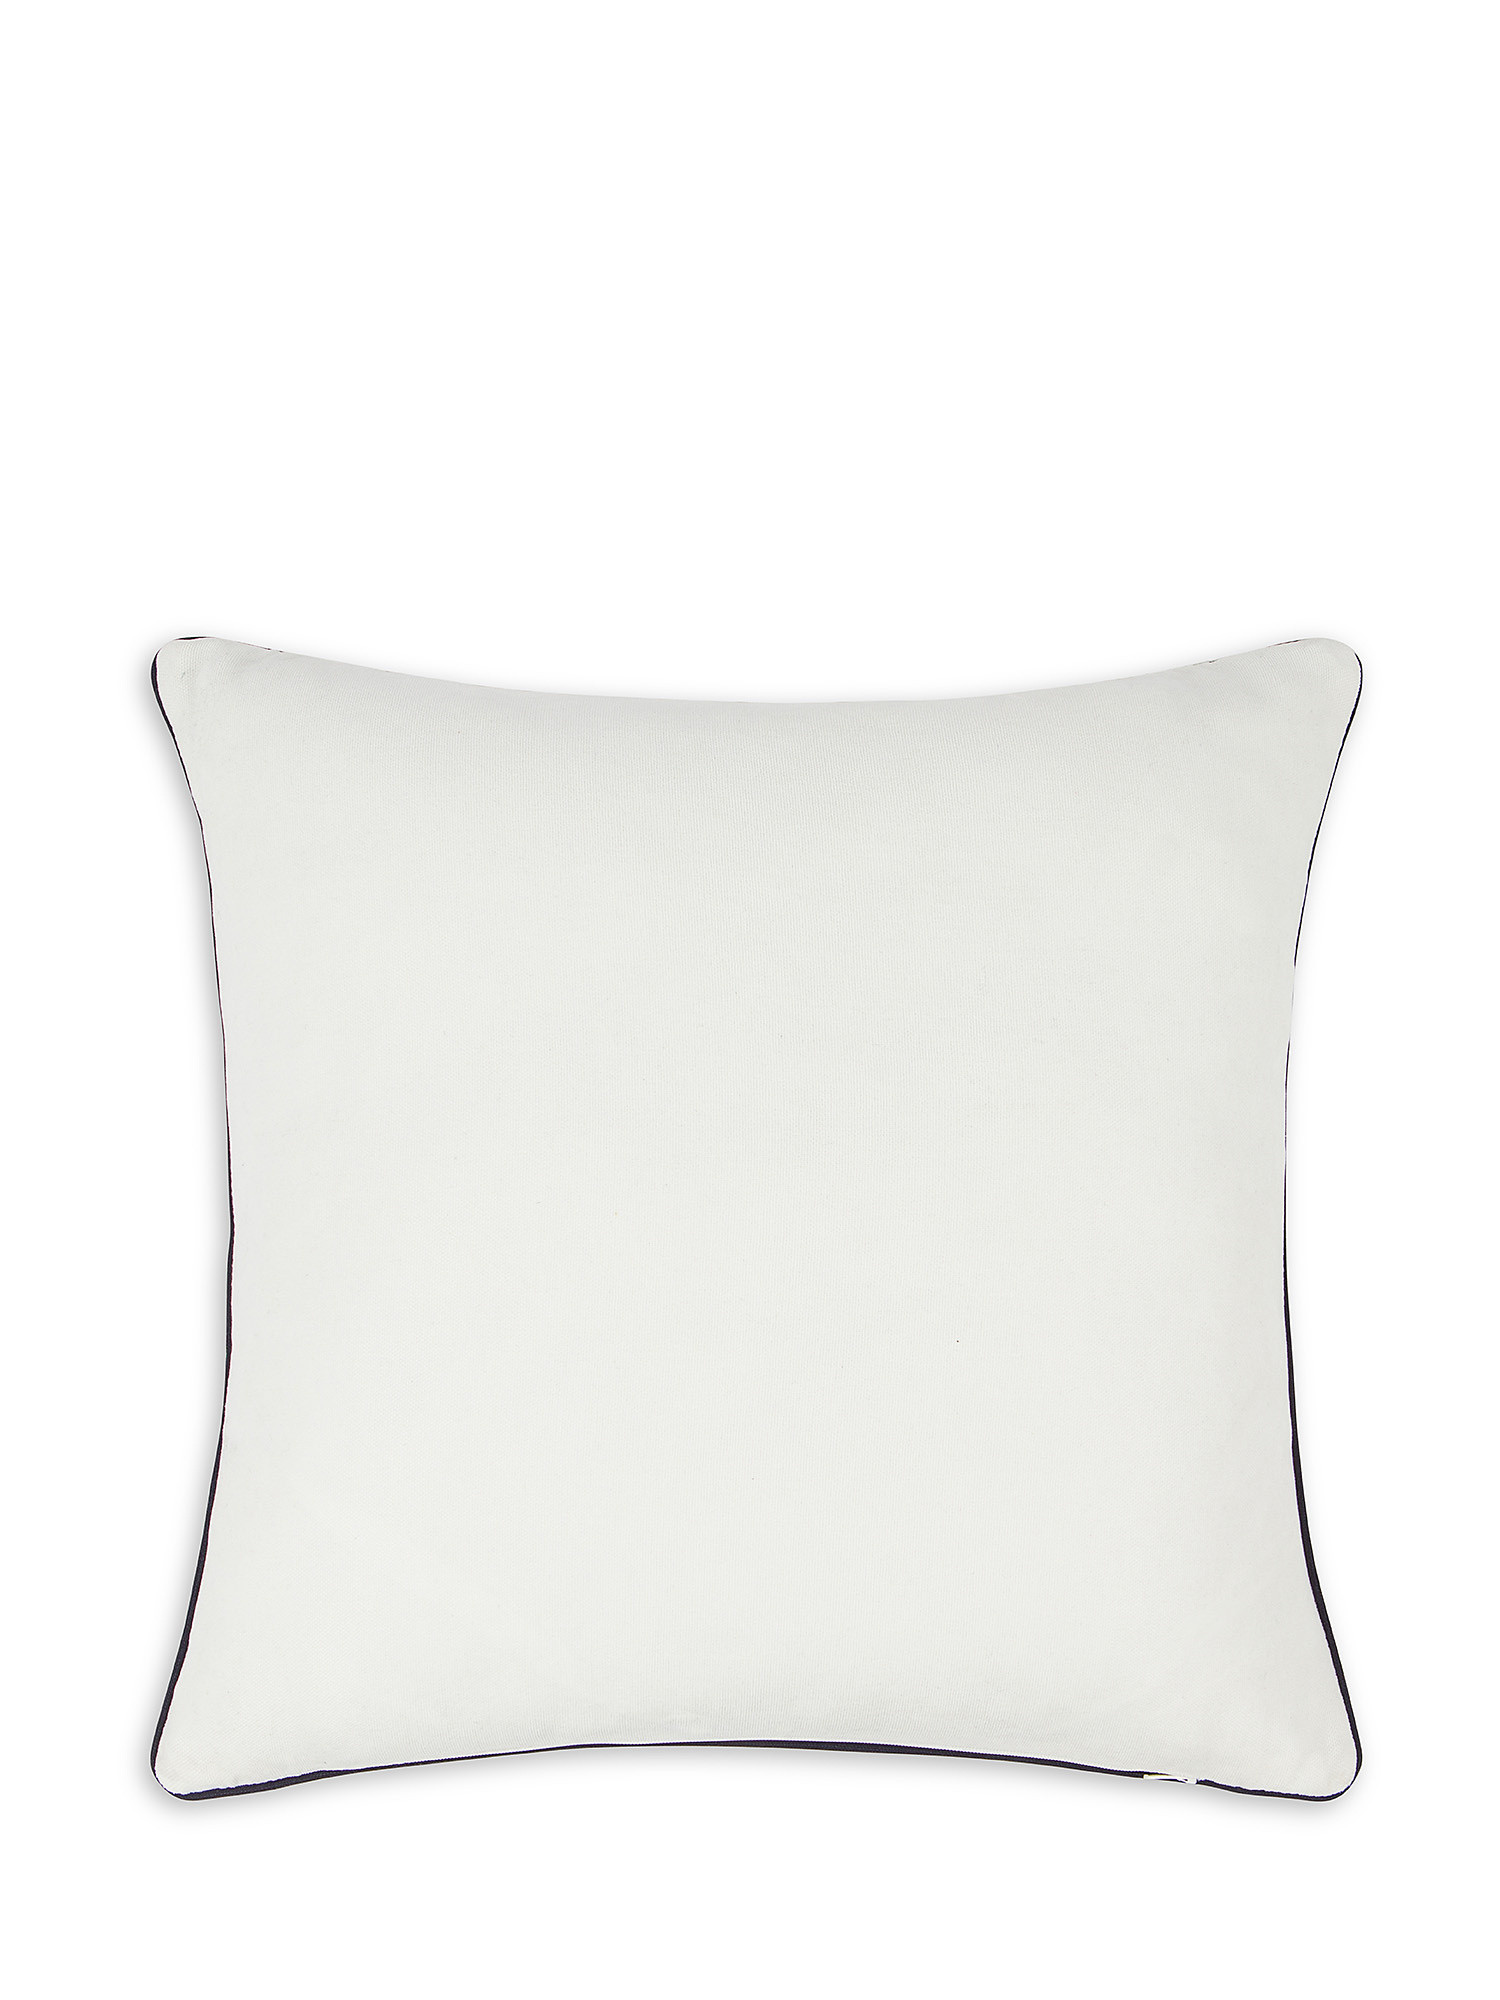 45x45 cm cotton cushion, Blue, large image number 1